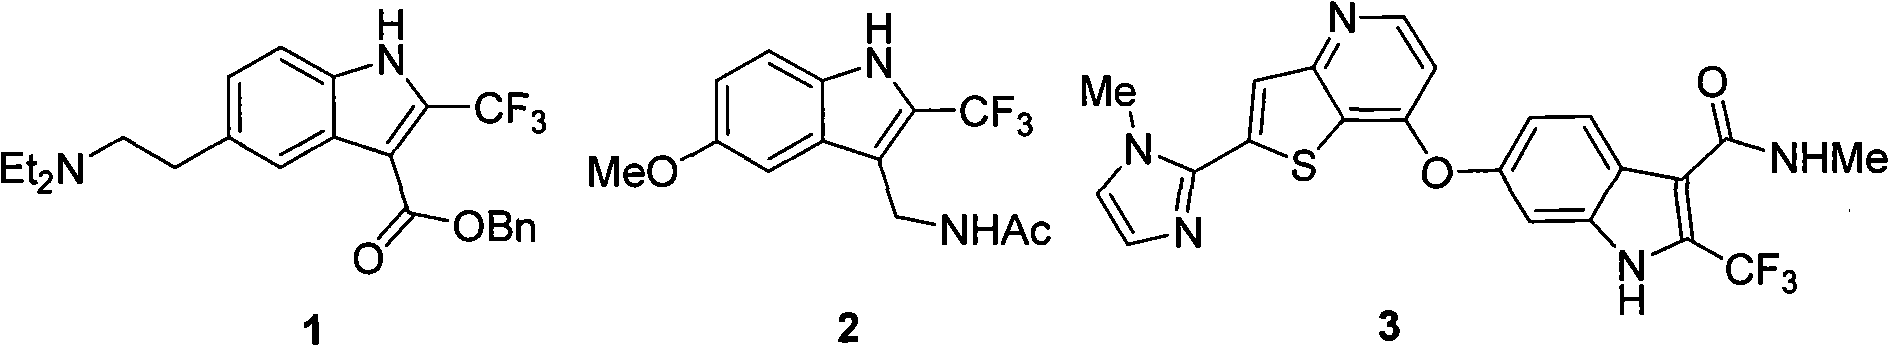 Preparation method of 2-trifluoromethyl indole derivatives